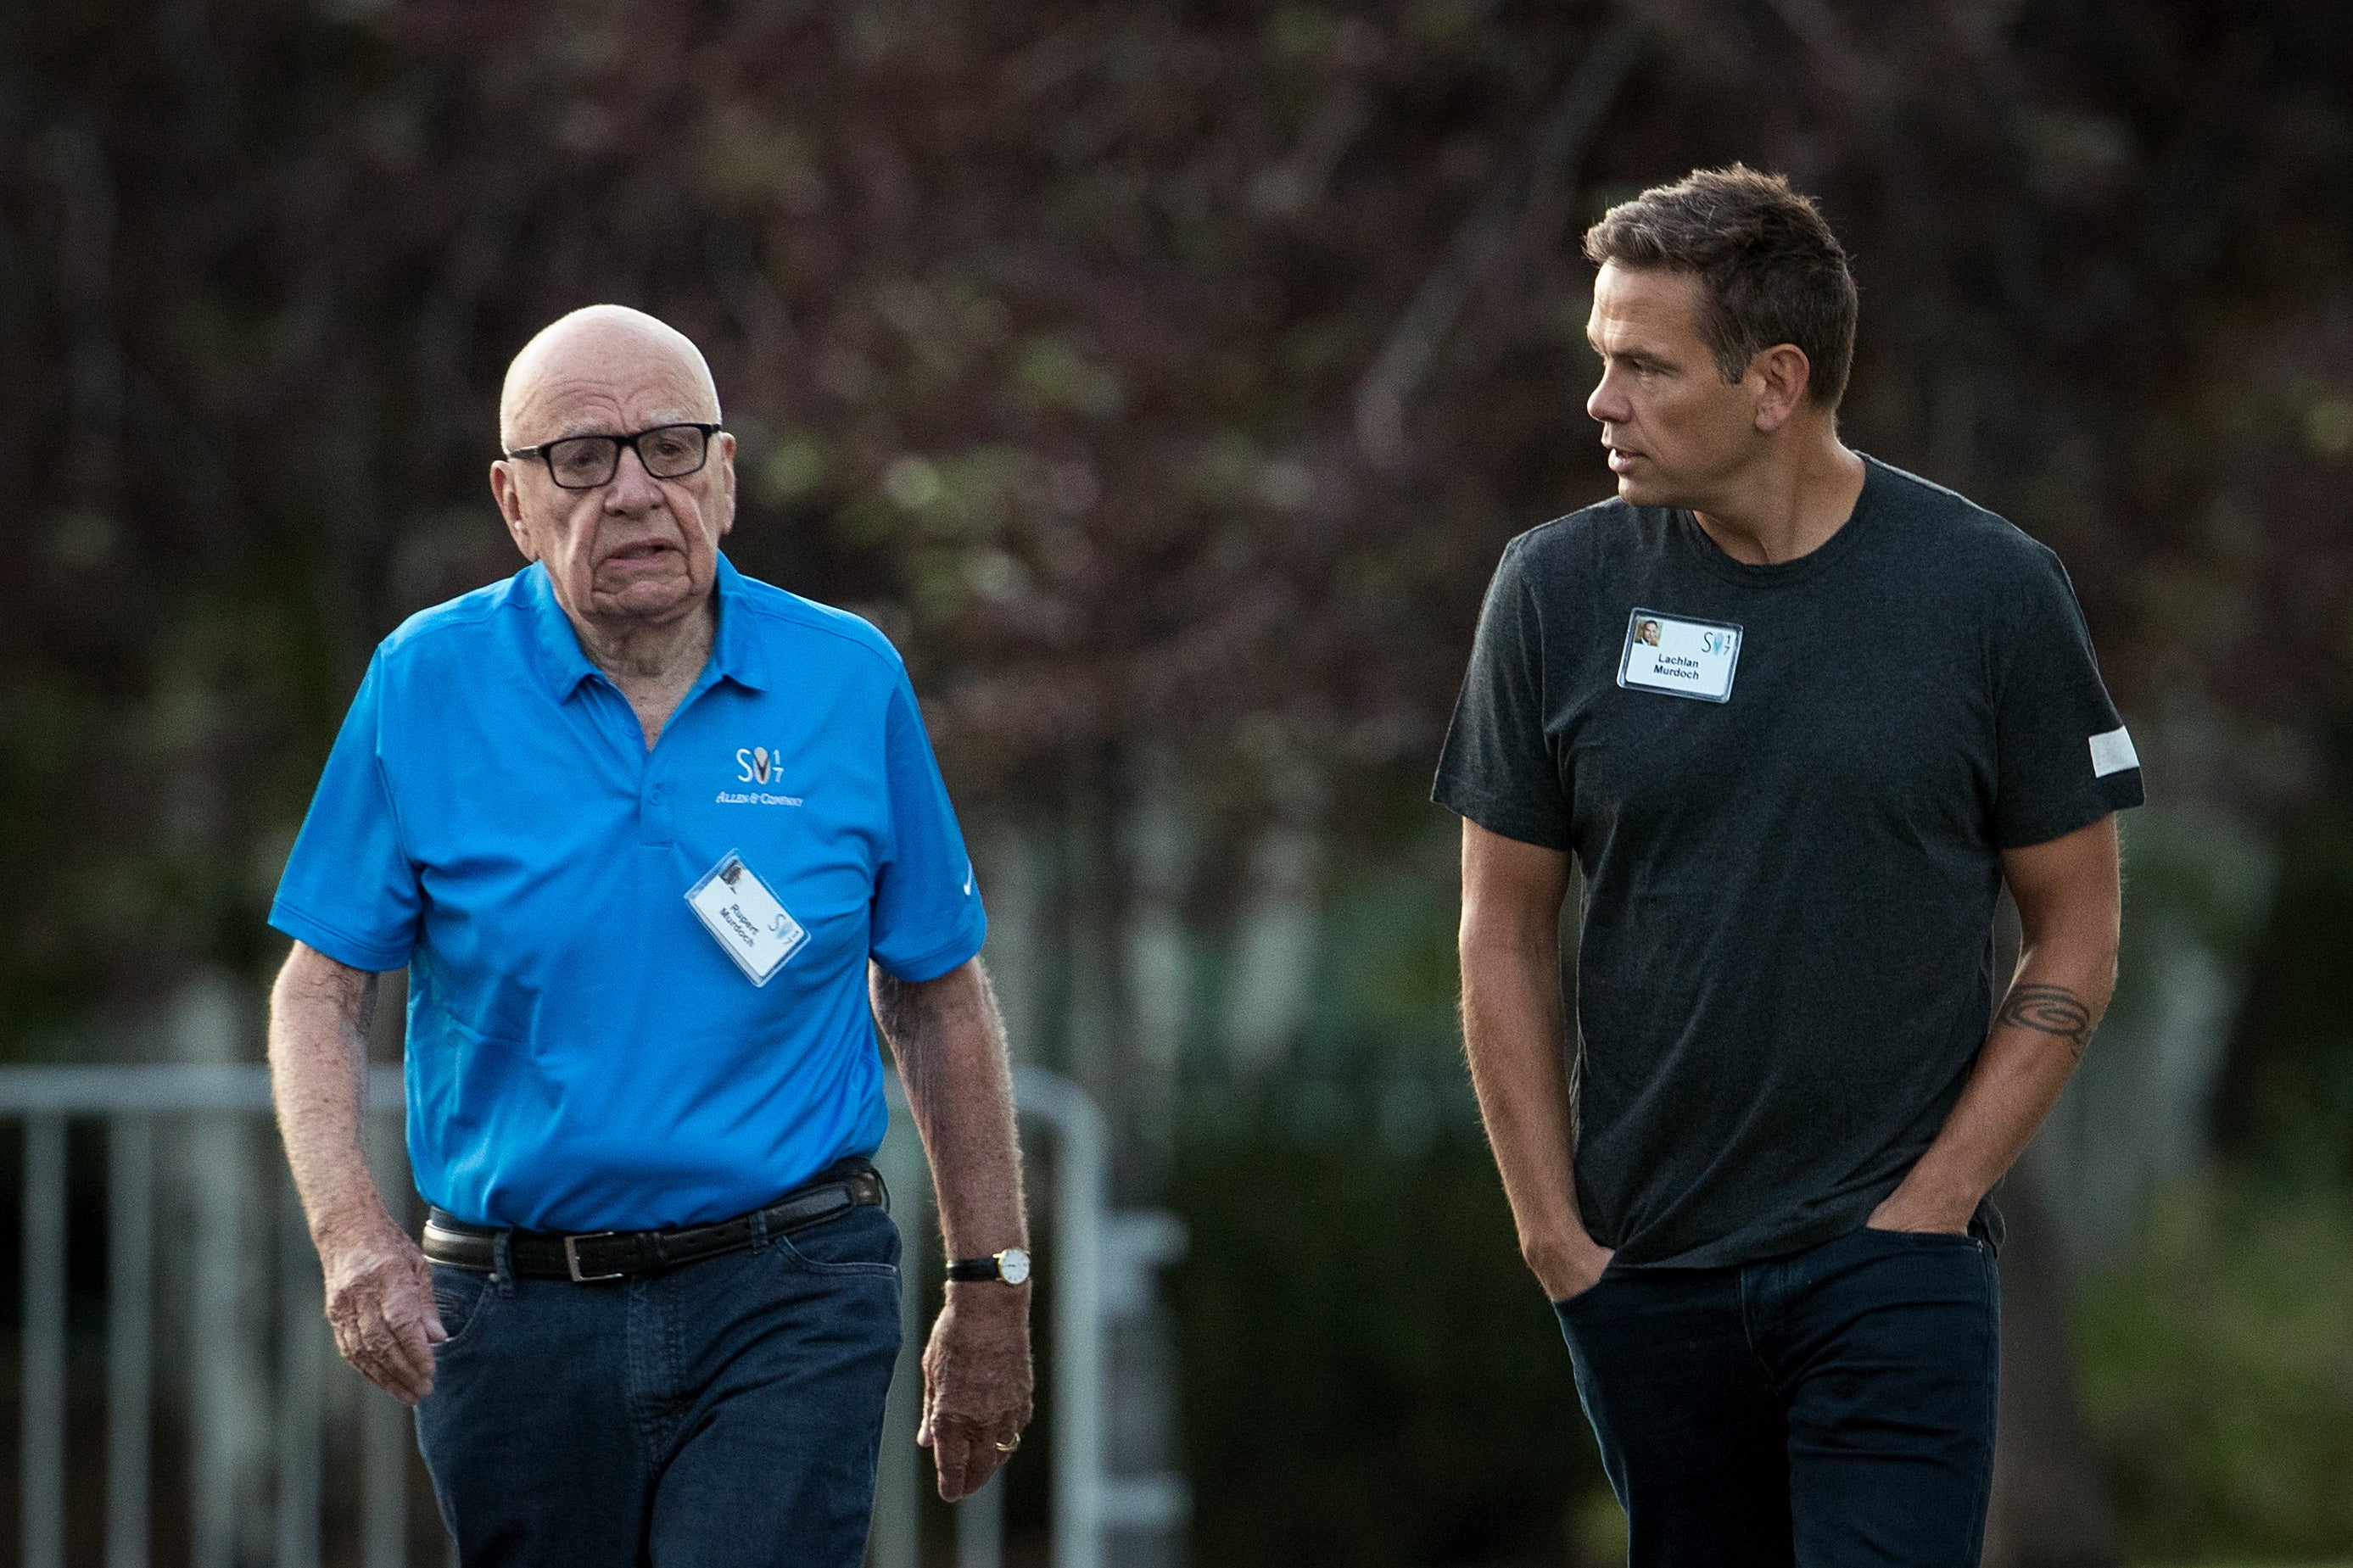 Rupert Murdoch and Lachlan Murdoch in Sun Valley, Idaho, in 2017